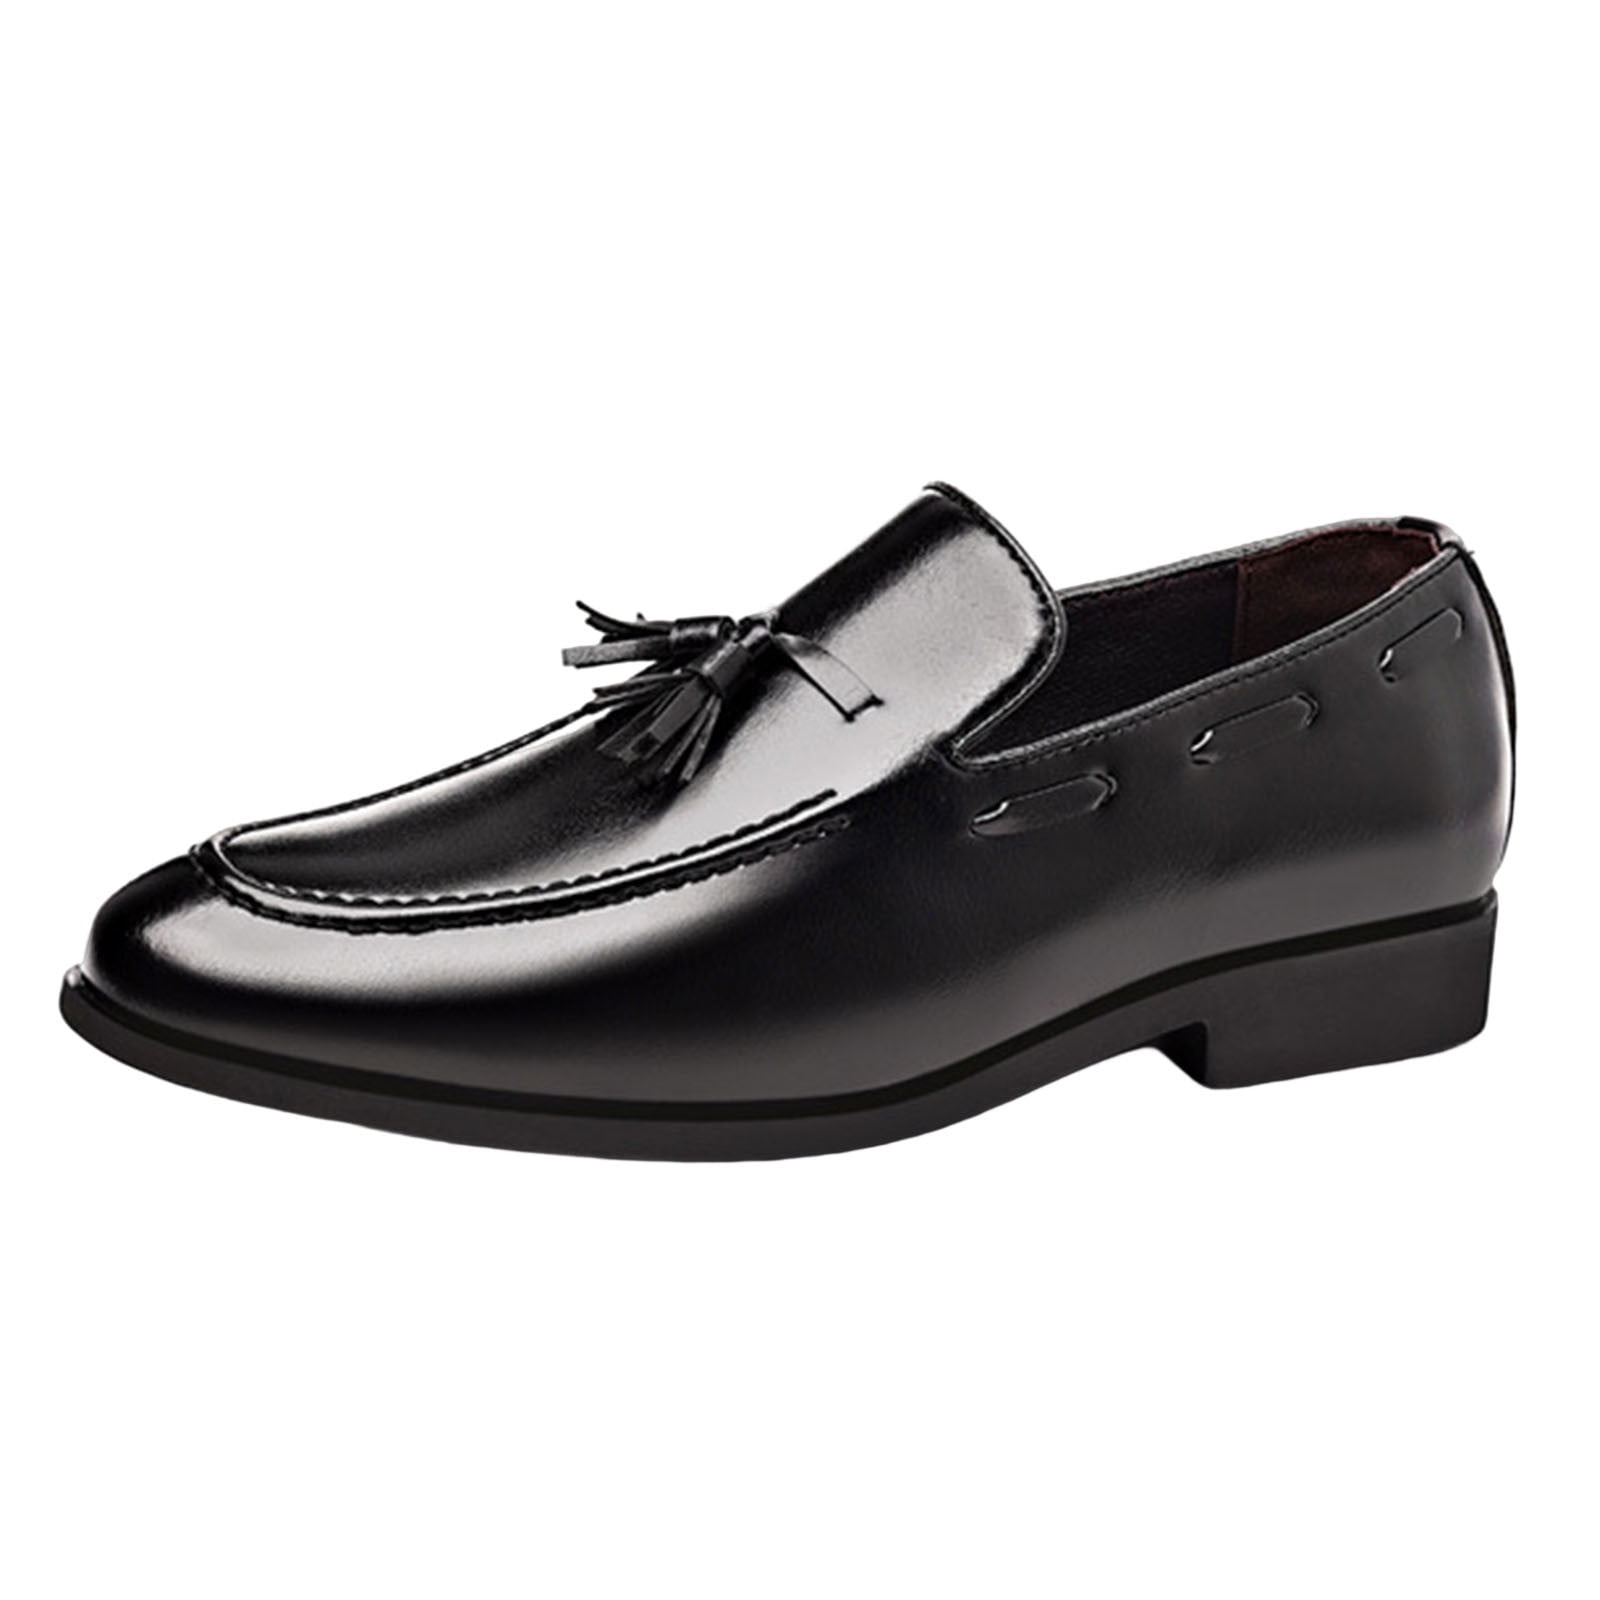 Comfy Black Leather Shoes Hotsell | bellvalefarms.com